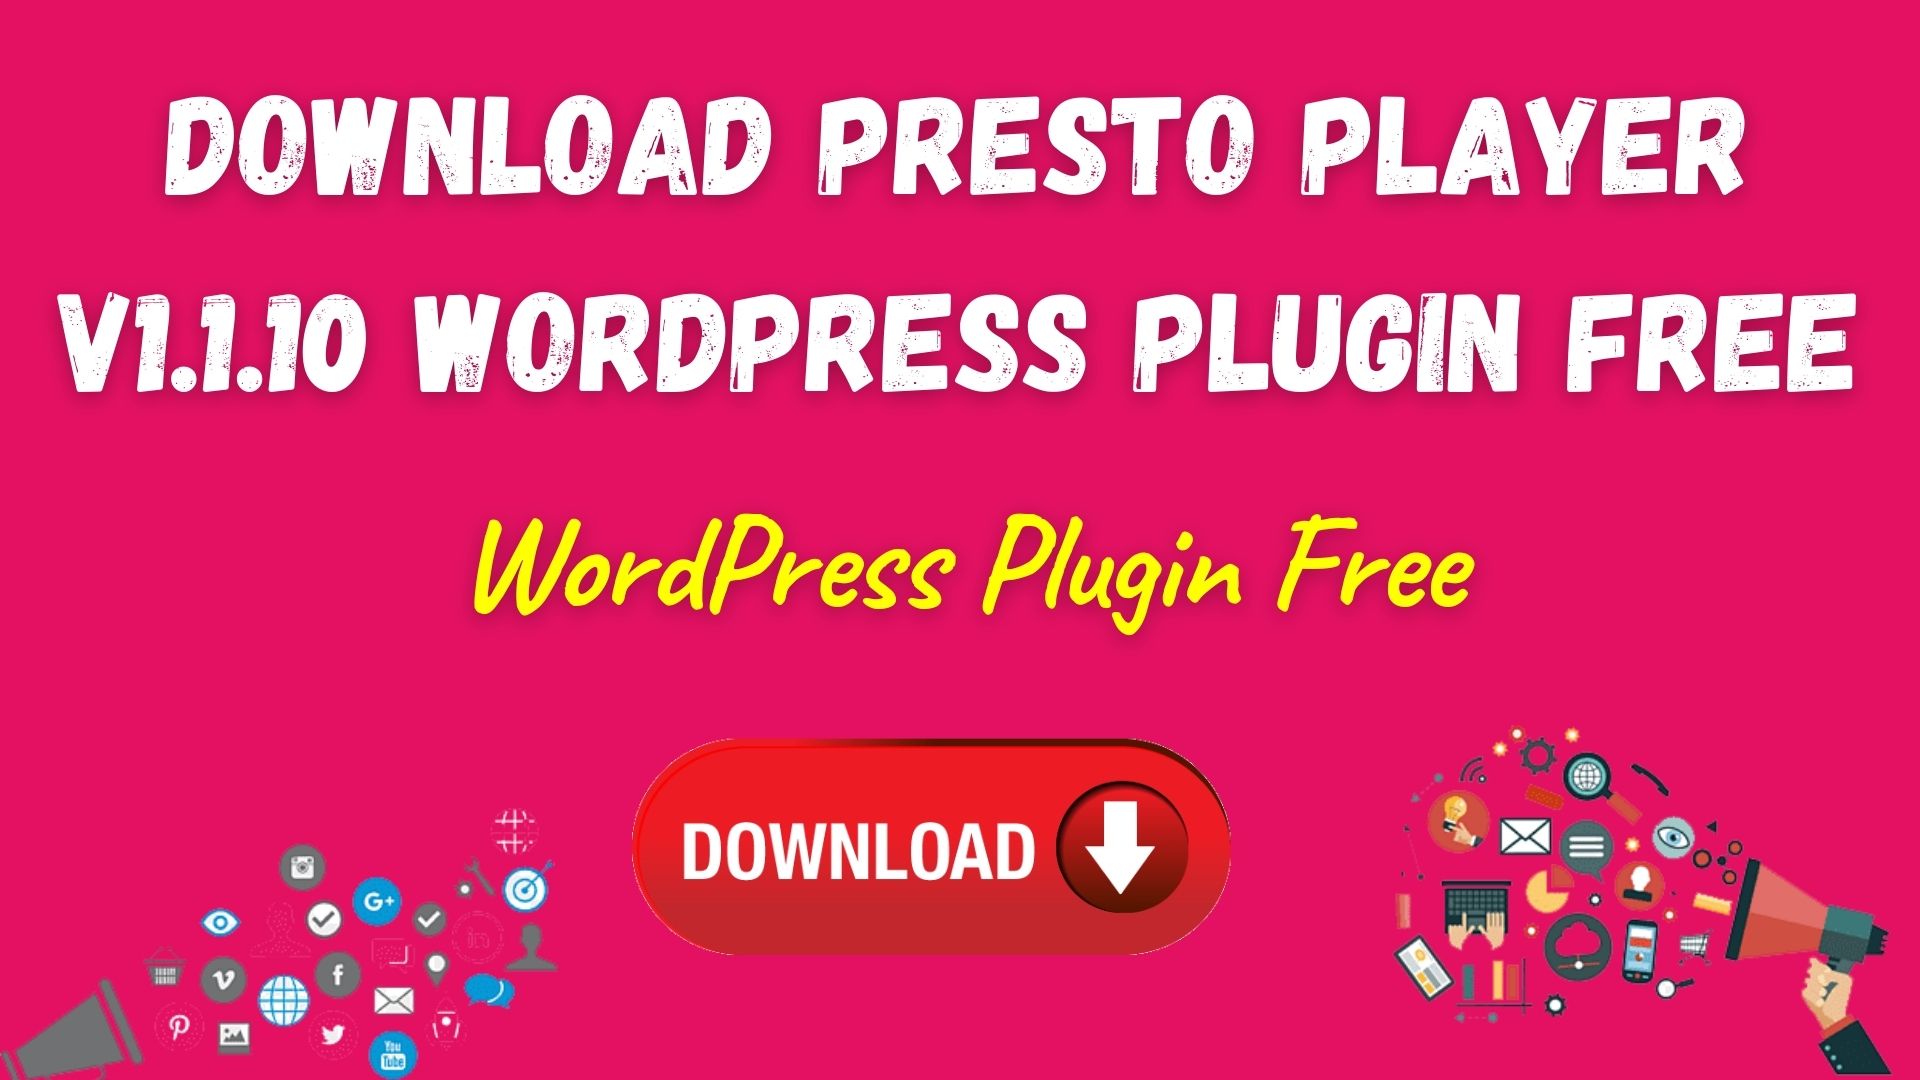 Download Presto Player V1.1.10 Wordpress Plugin Free